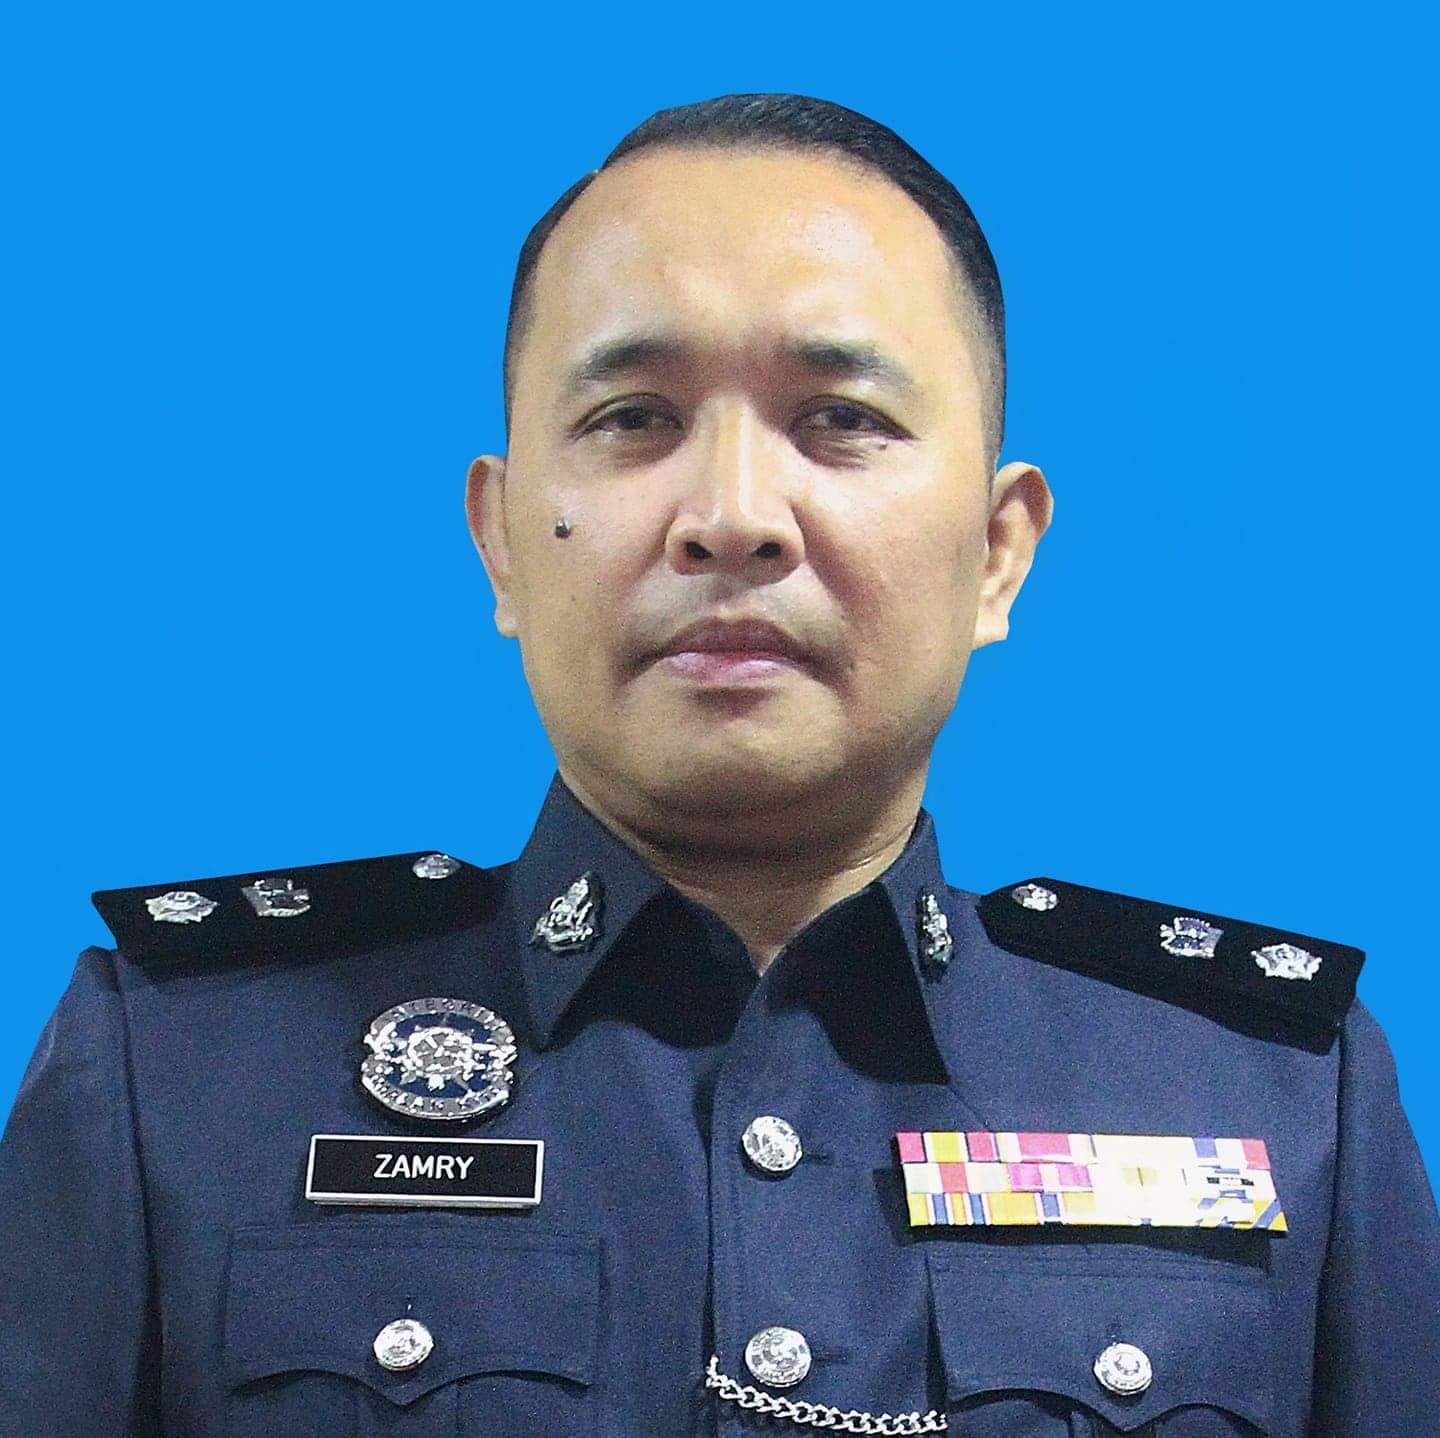 Segamat district police chief superintendent ahmad zamry marinsah